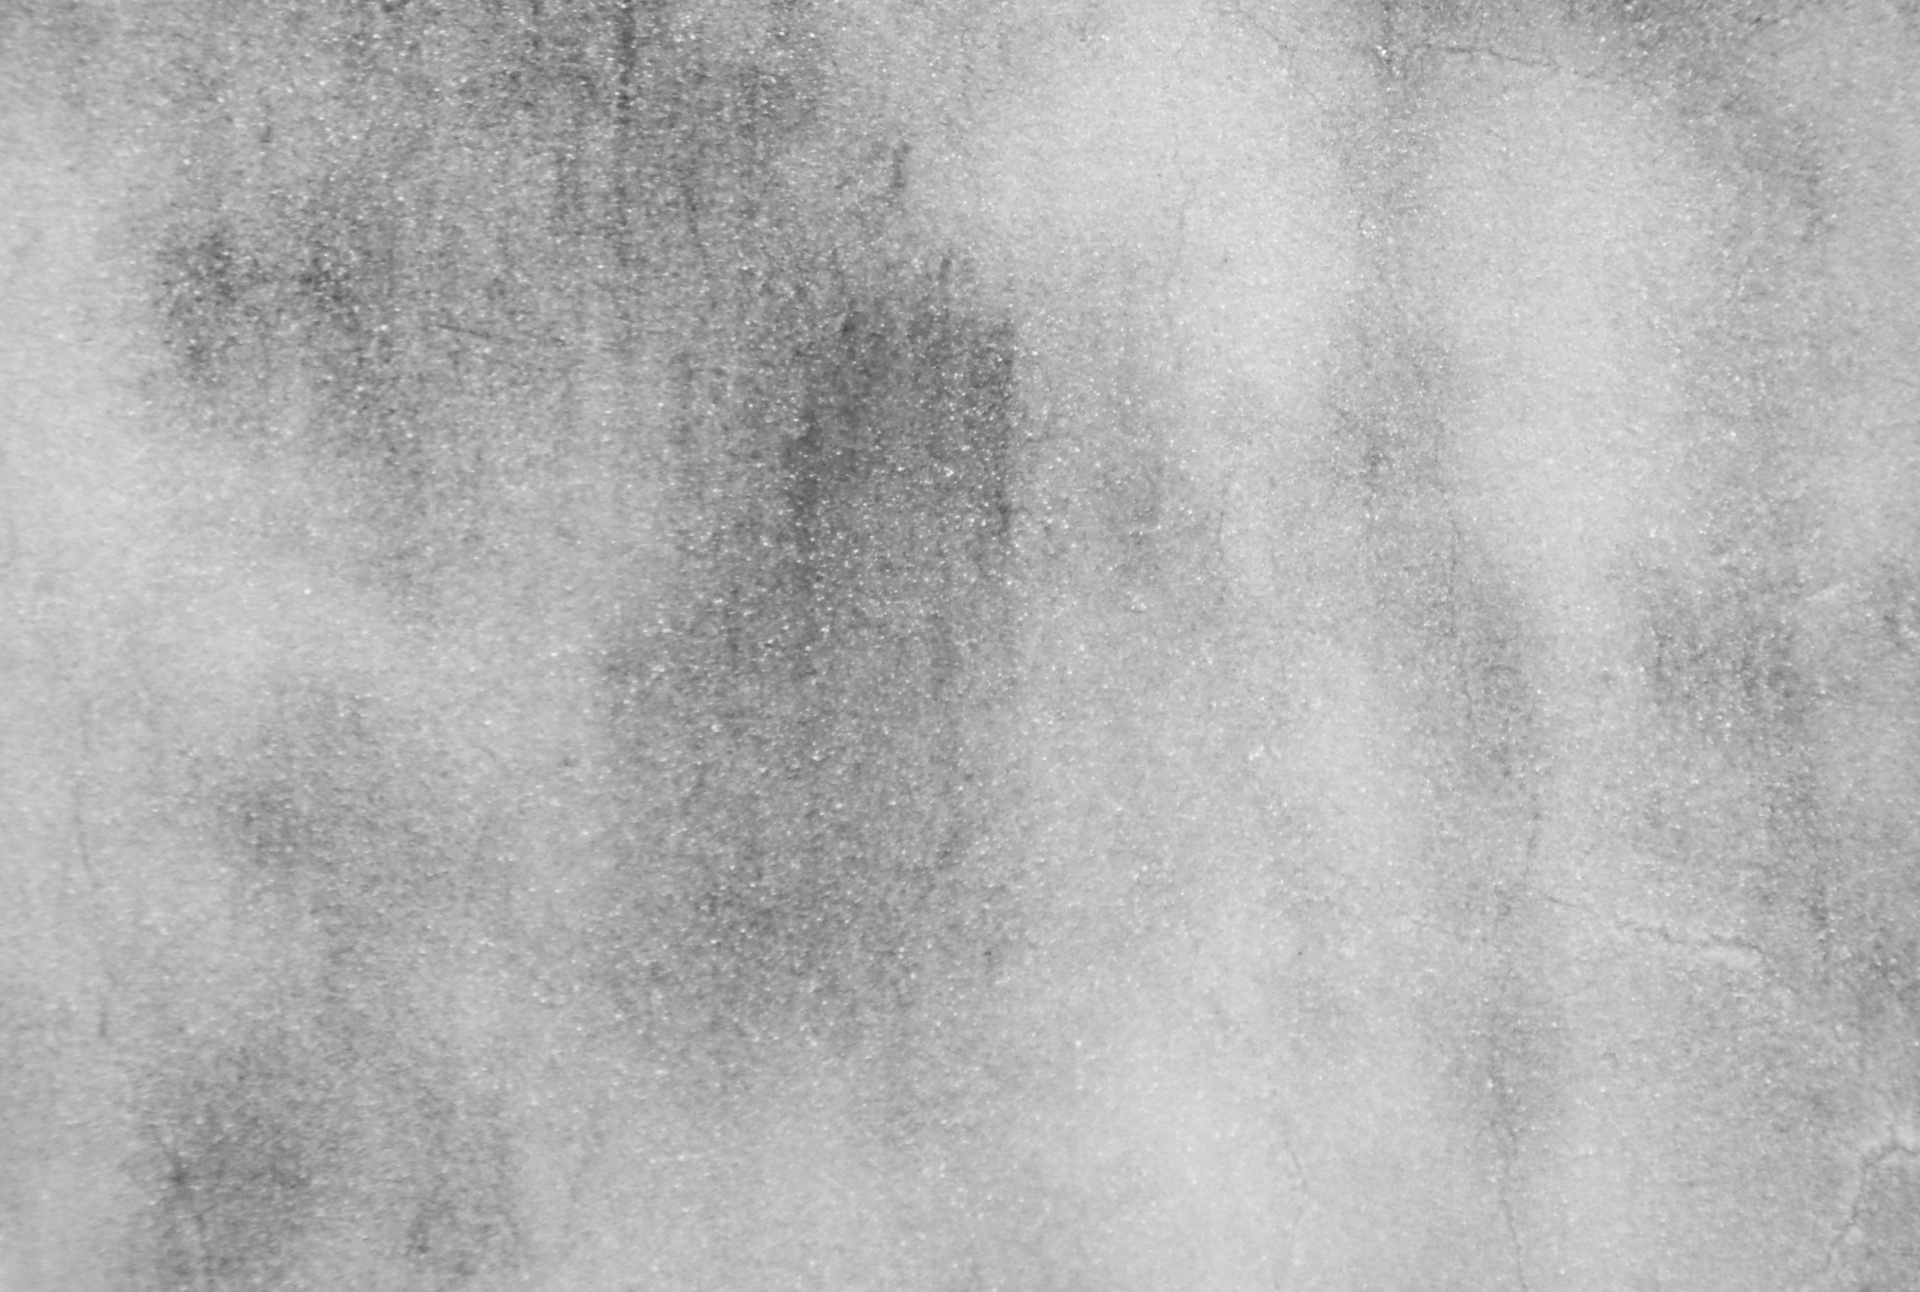 Grey Concrete Texture Free Stock Photo - Public Domain Pictures